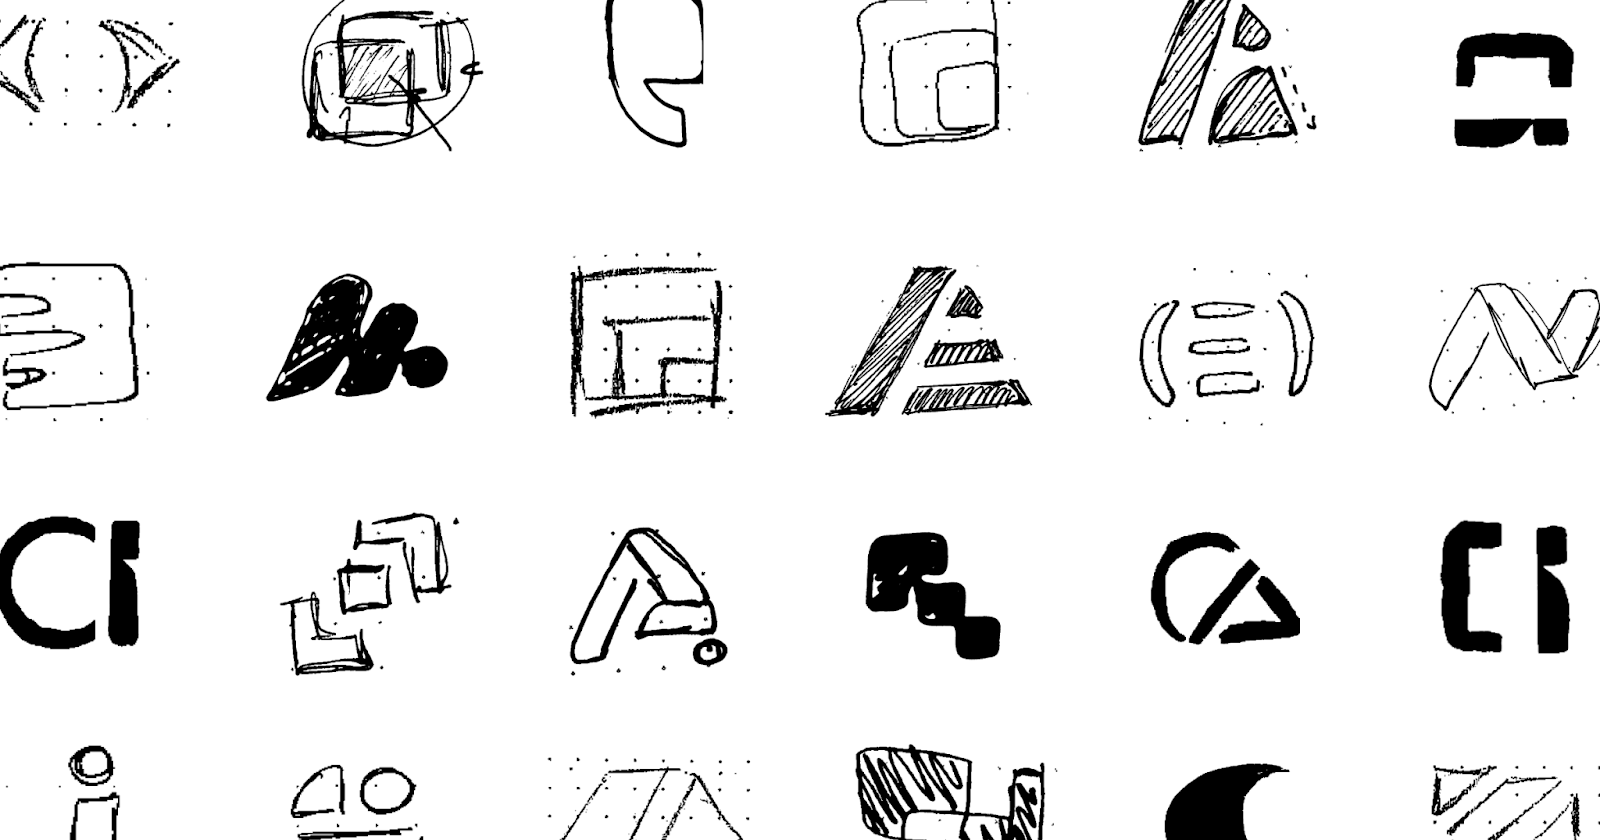 Appwrite's new logo drafts